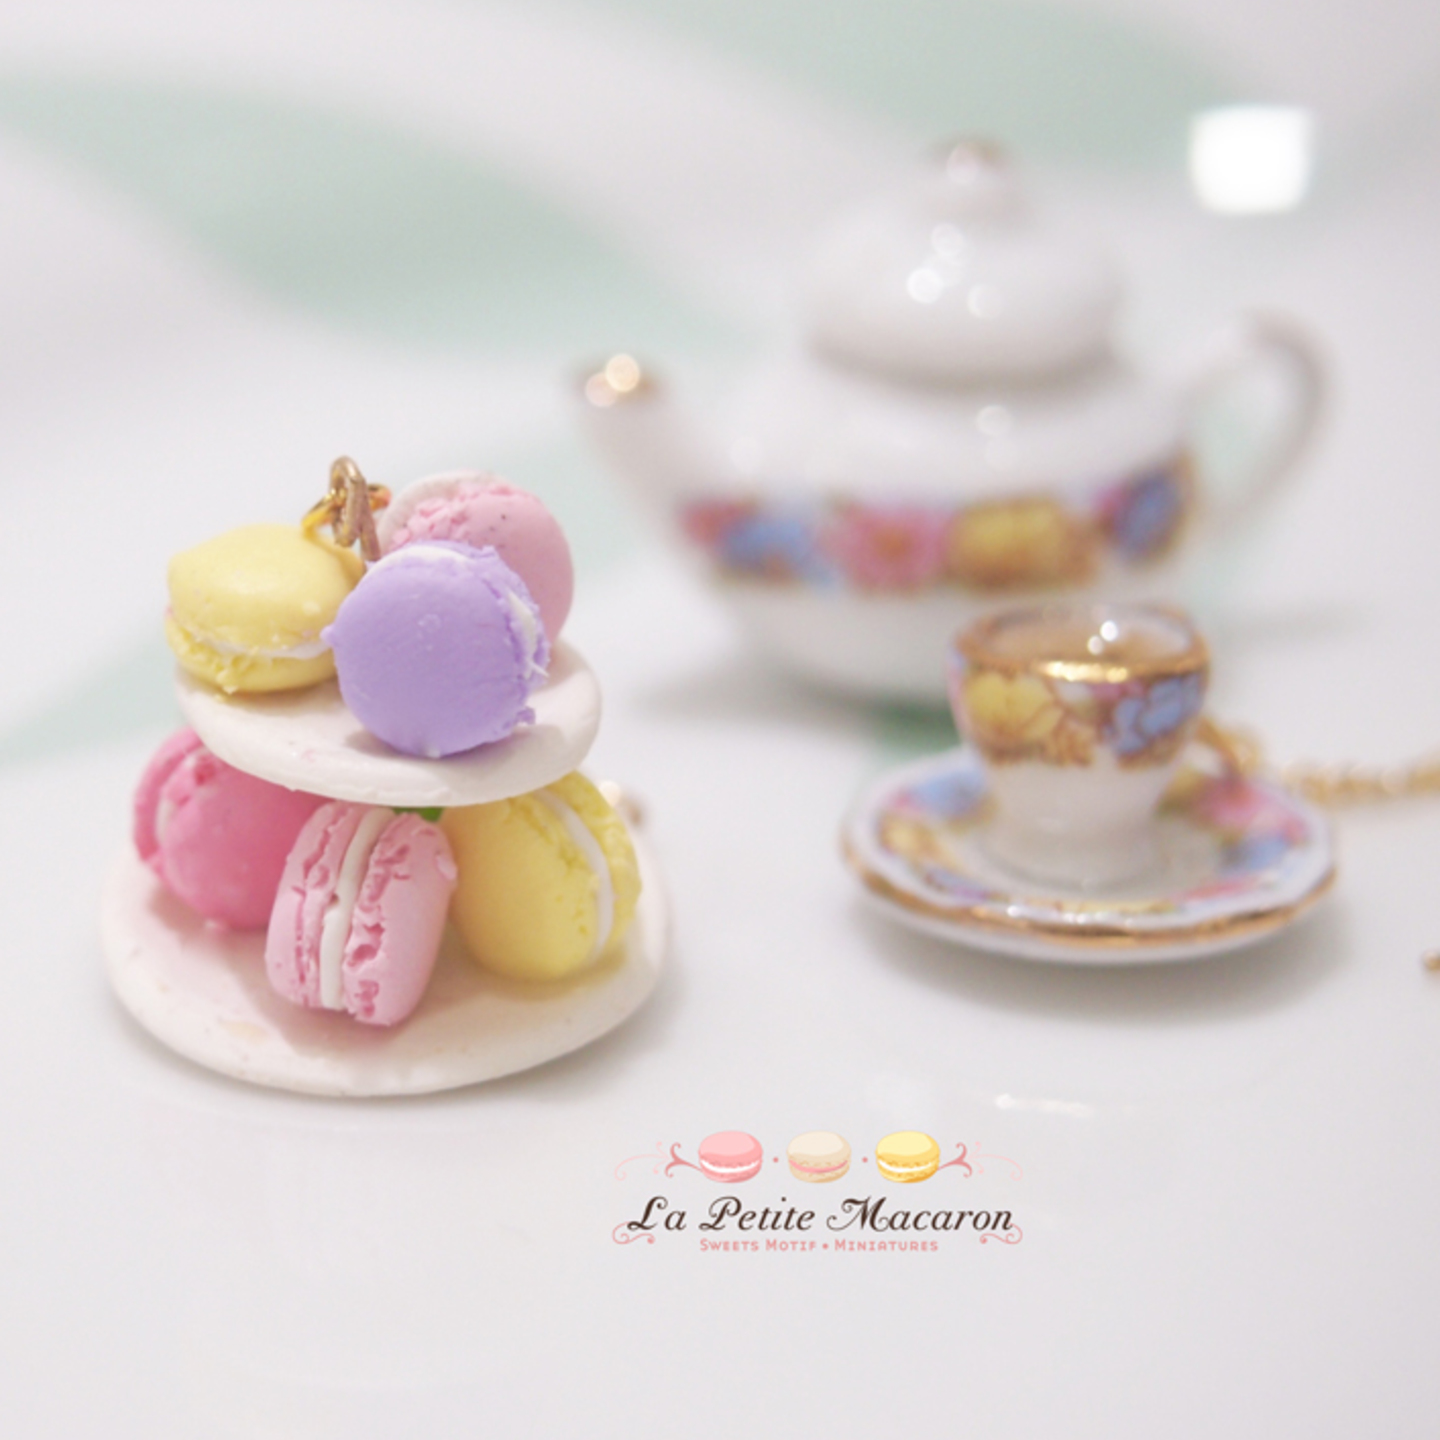 Miniature Food Workshop - Petite Macaron Charm Workshop